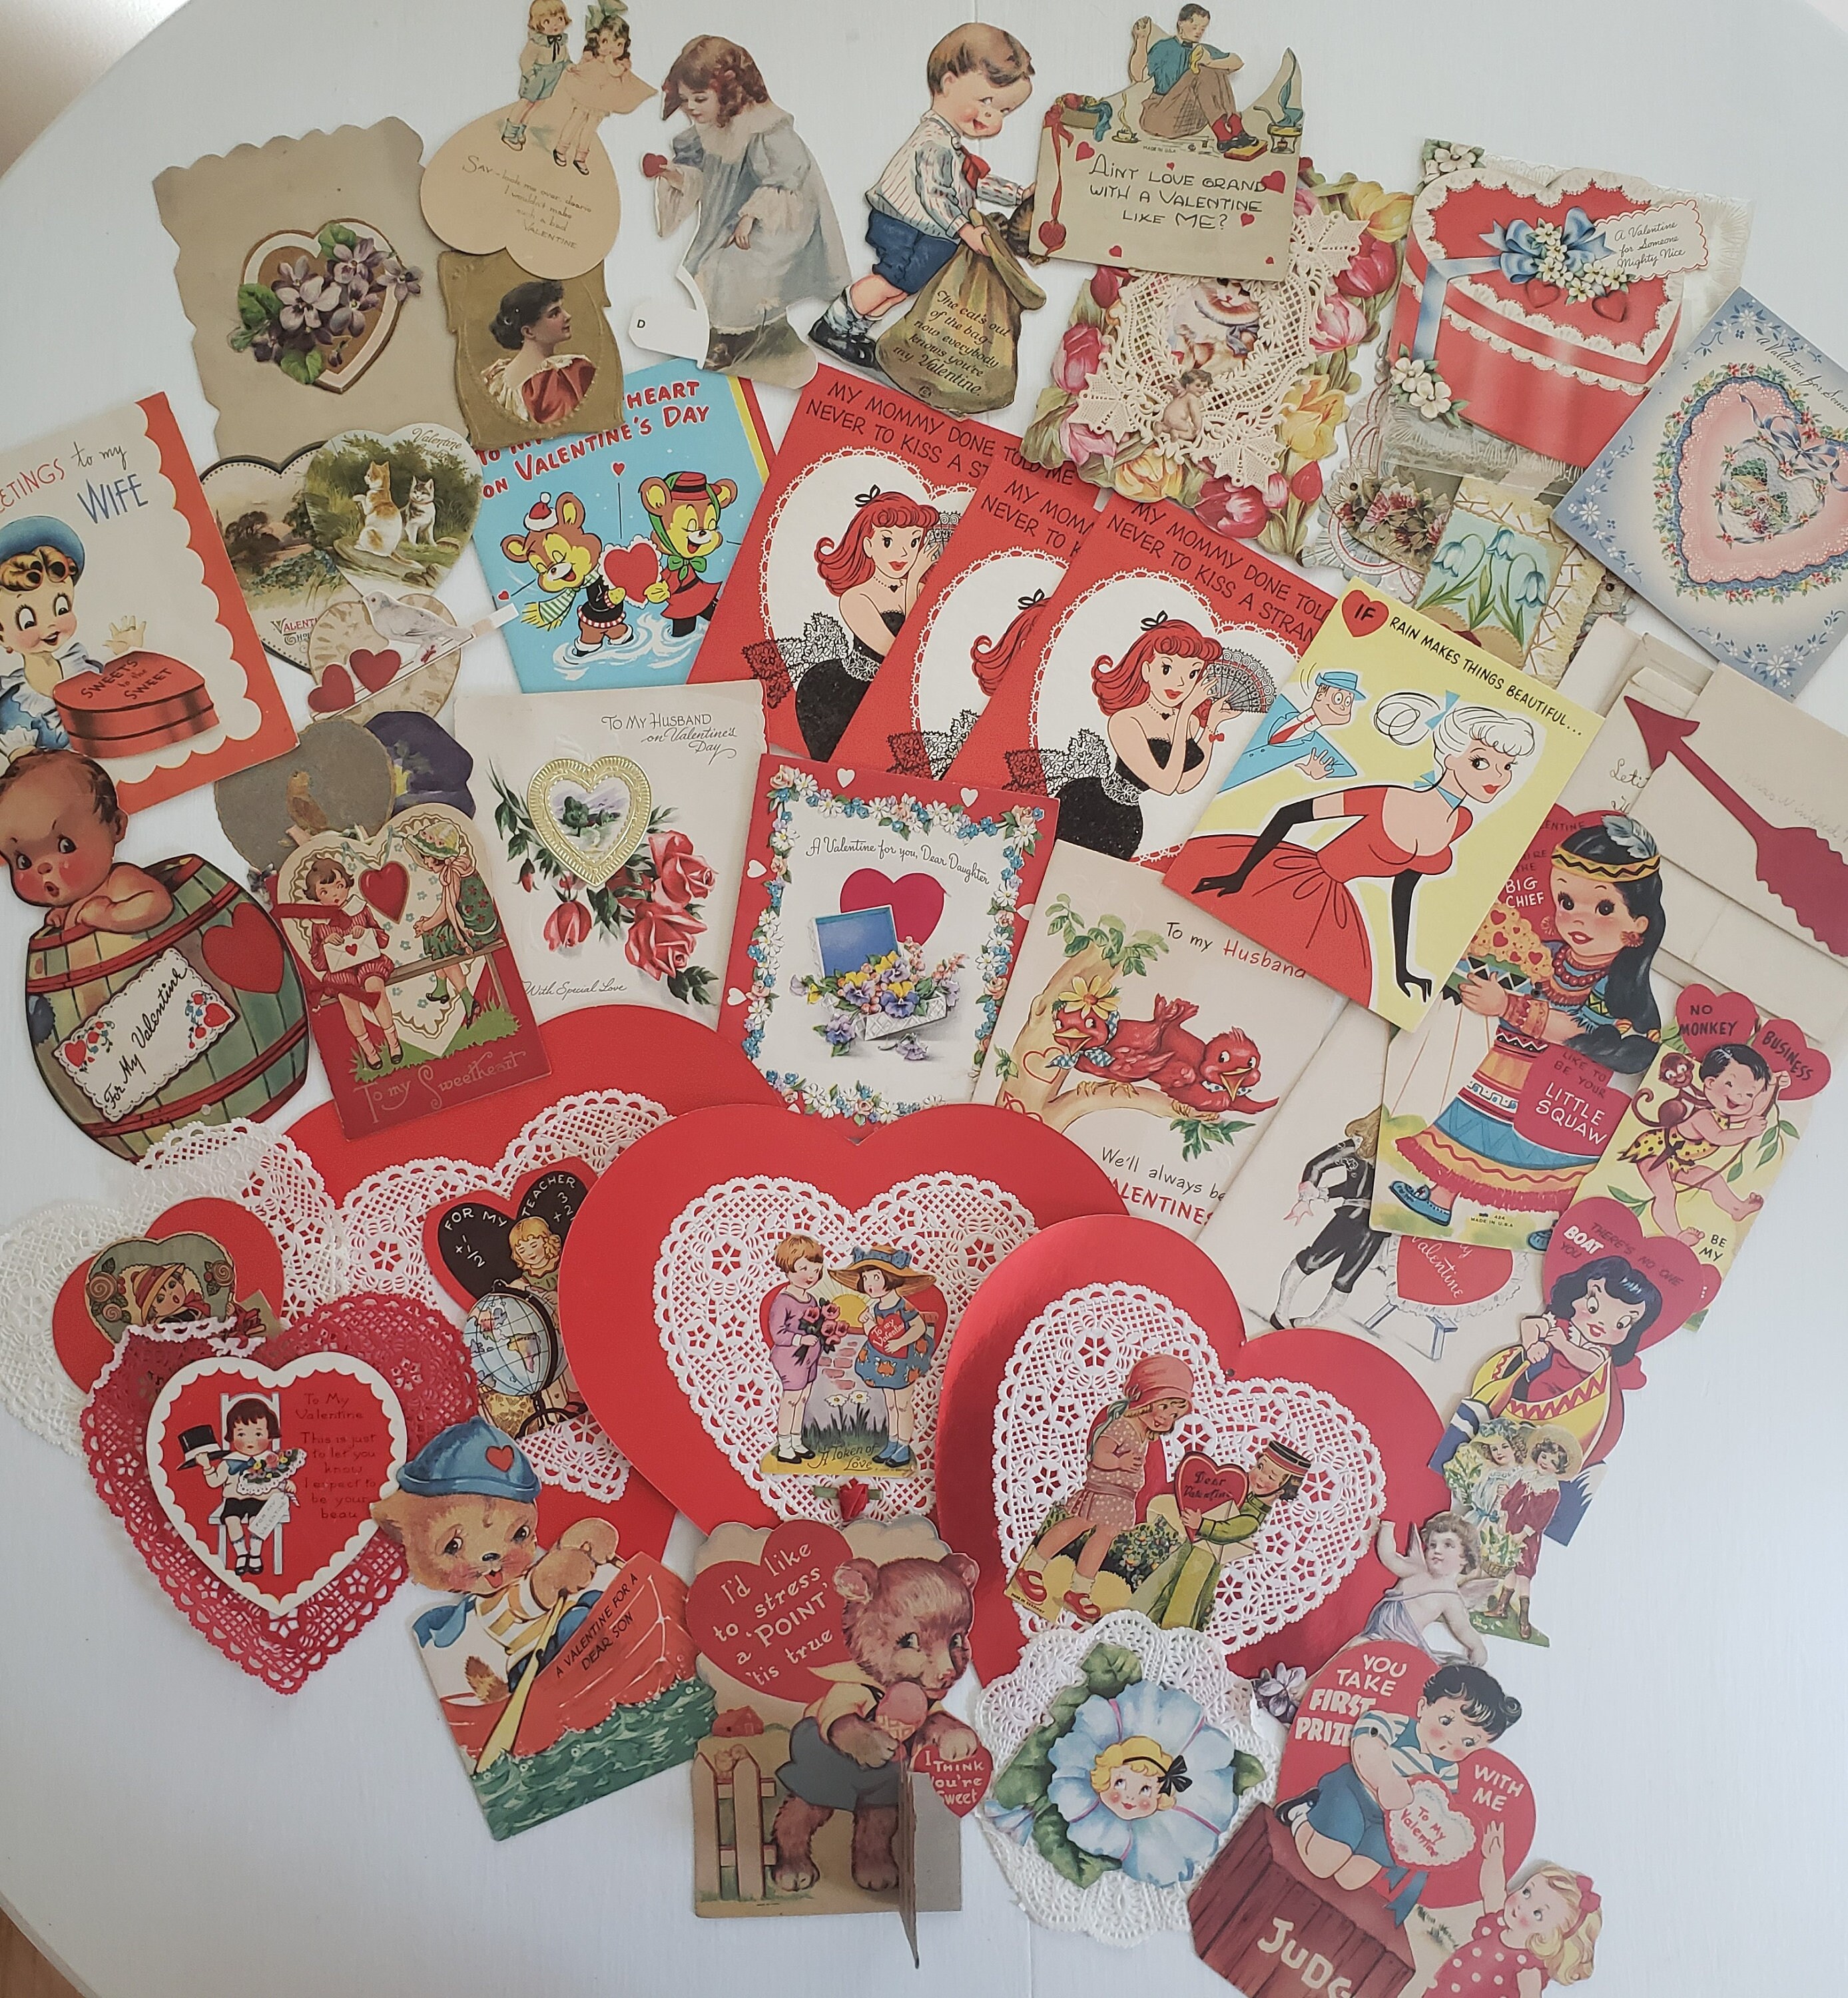 Vintage Valentines Day Card, Old Fashioned Valentines, Vintage